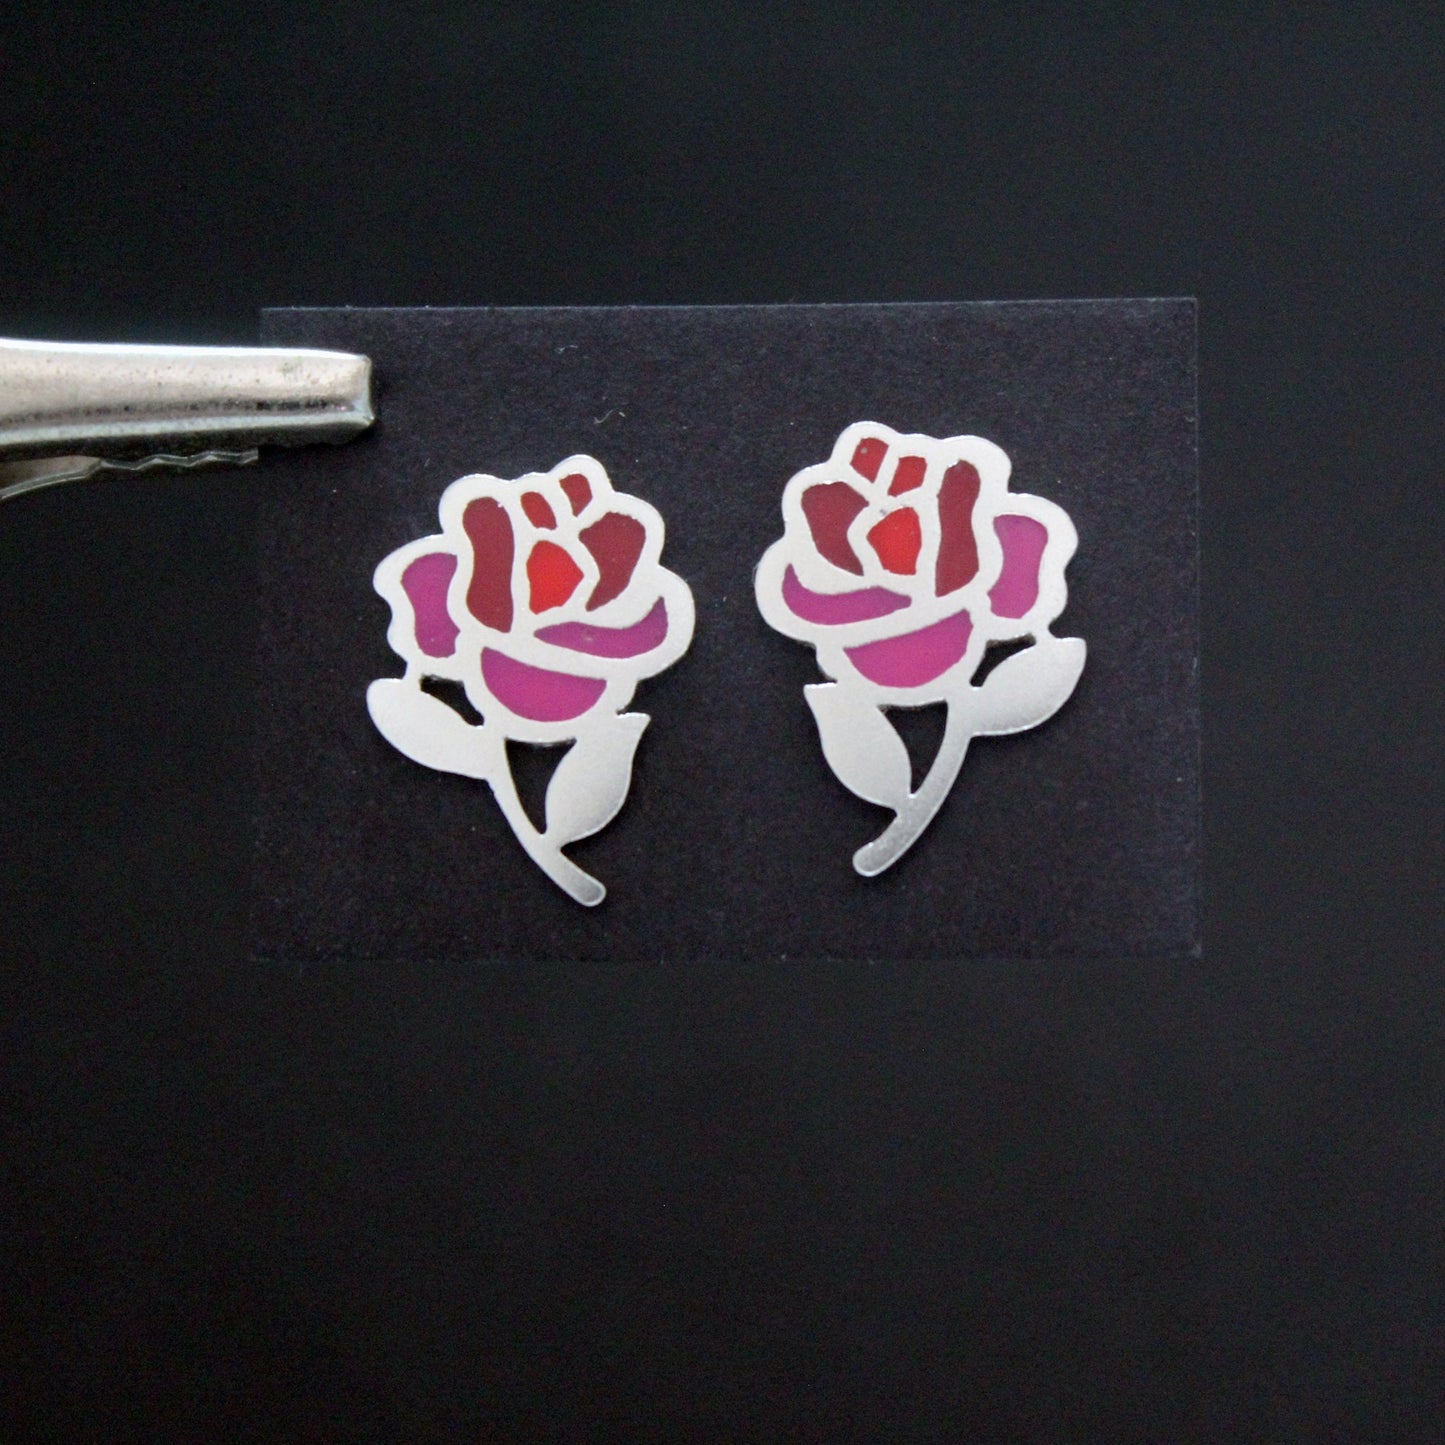 Color Roses earrings in 925 silver